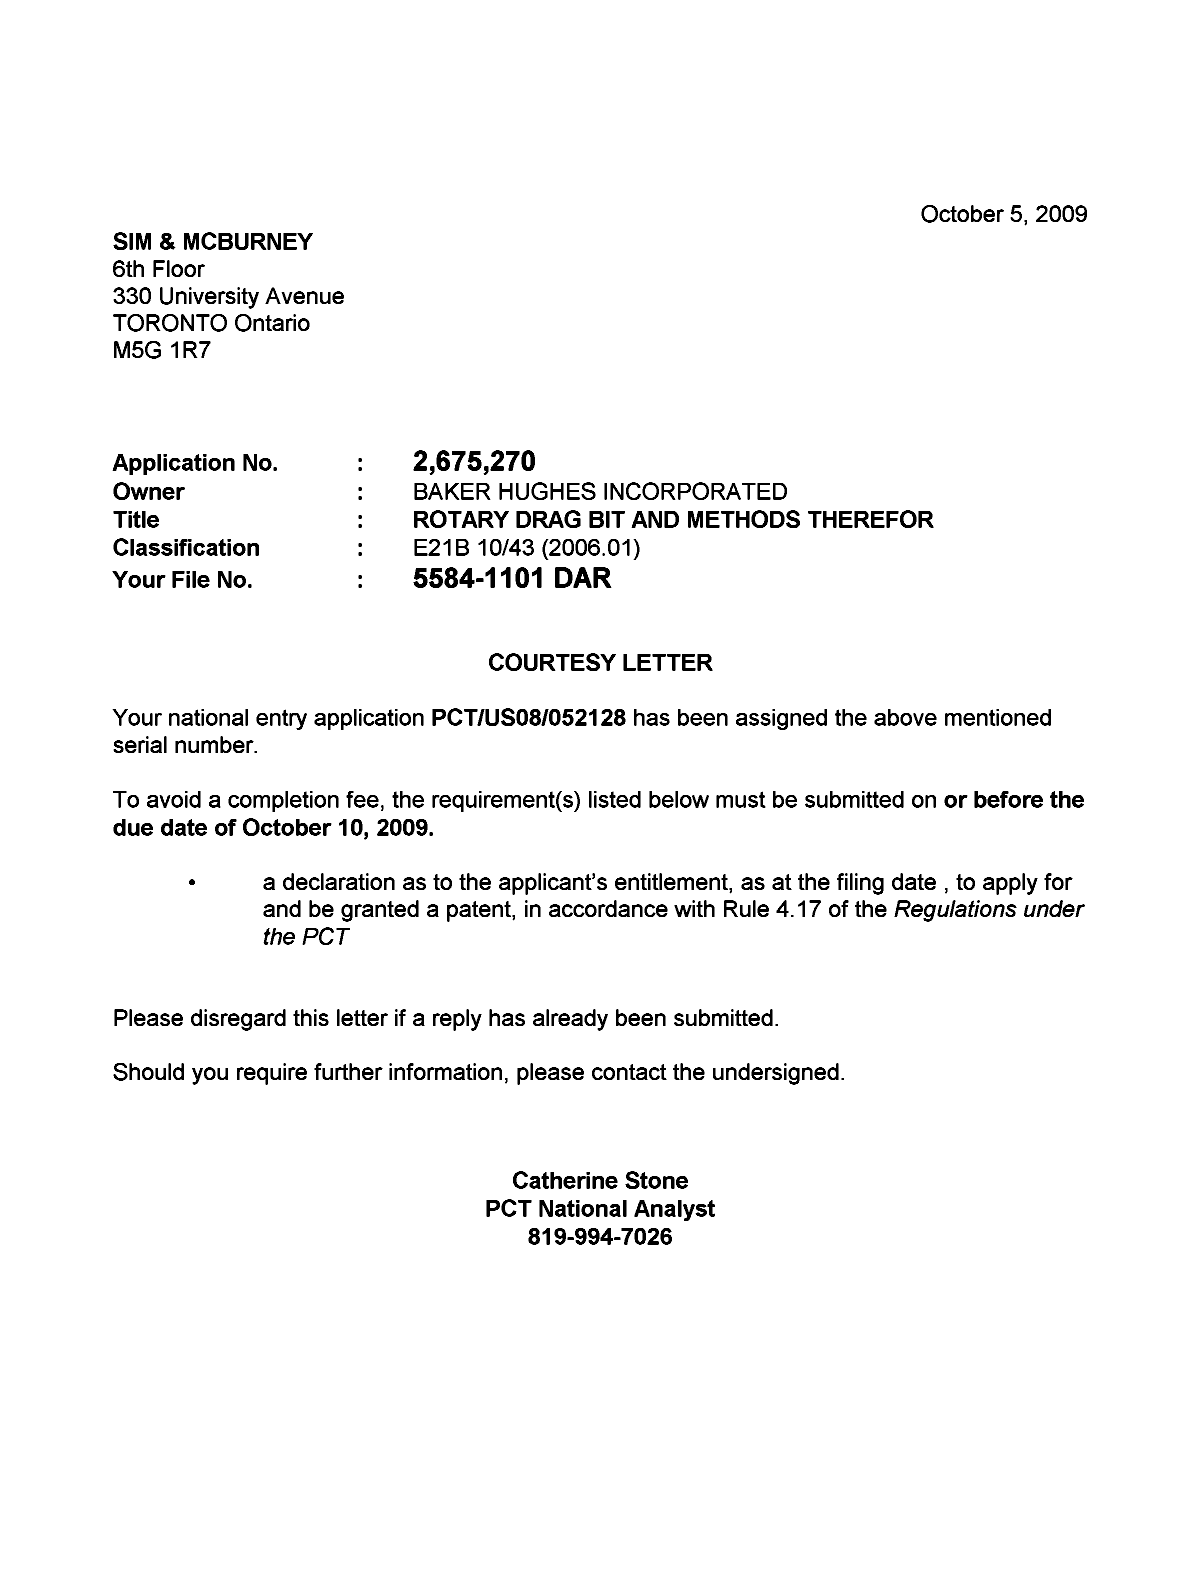 Canadian Patent Document 2675270. Correspondence 20091005. Image 1 of 1